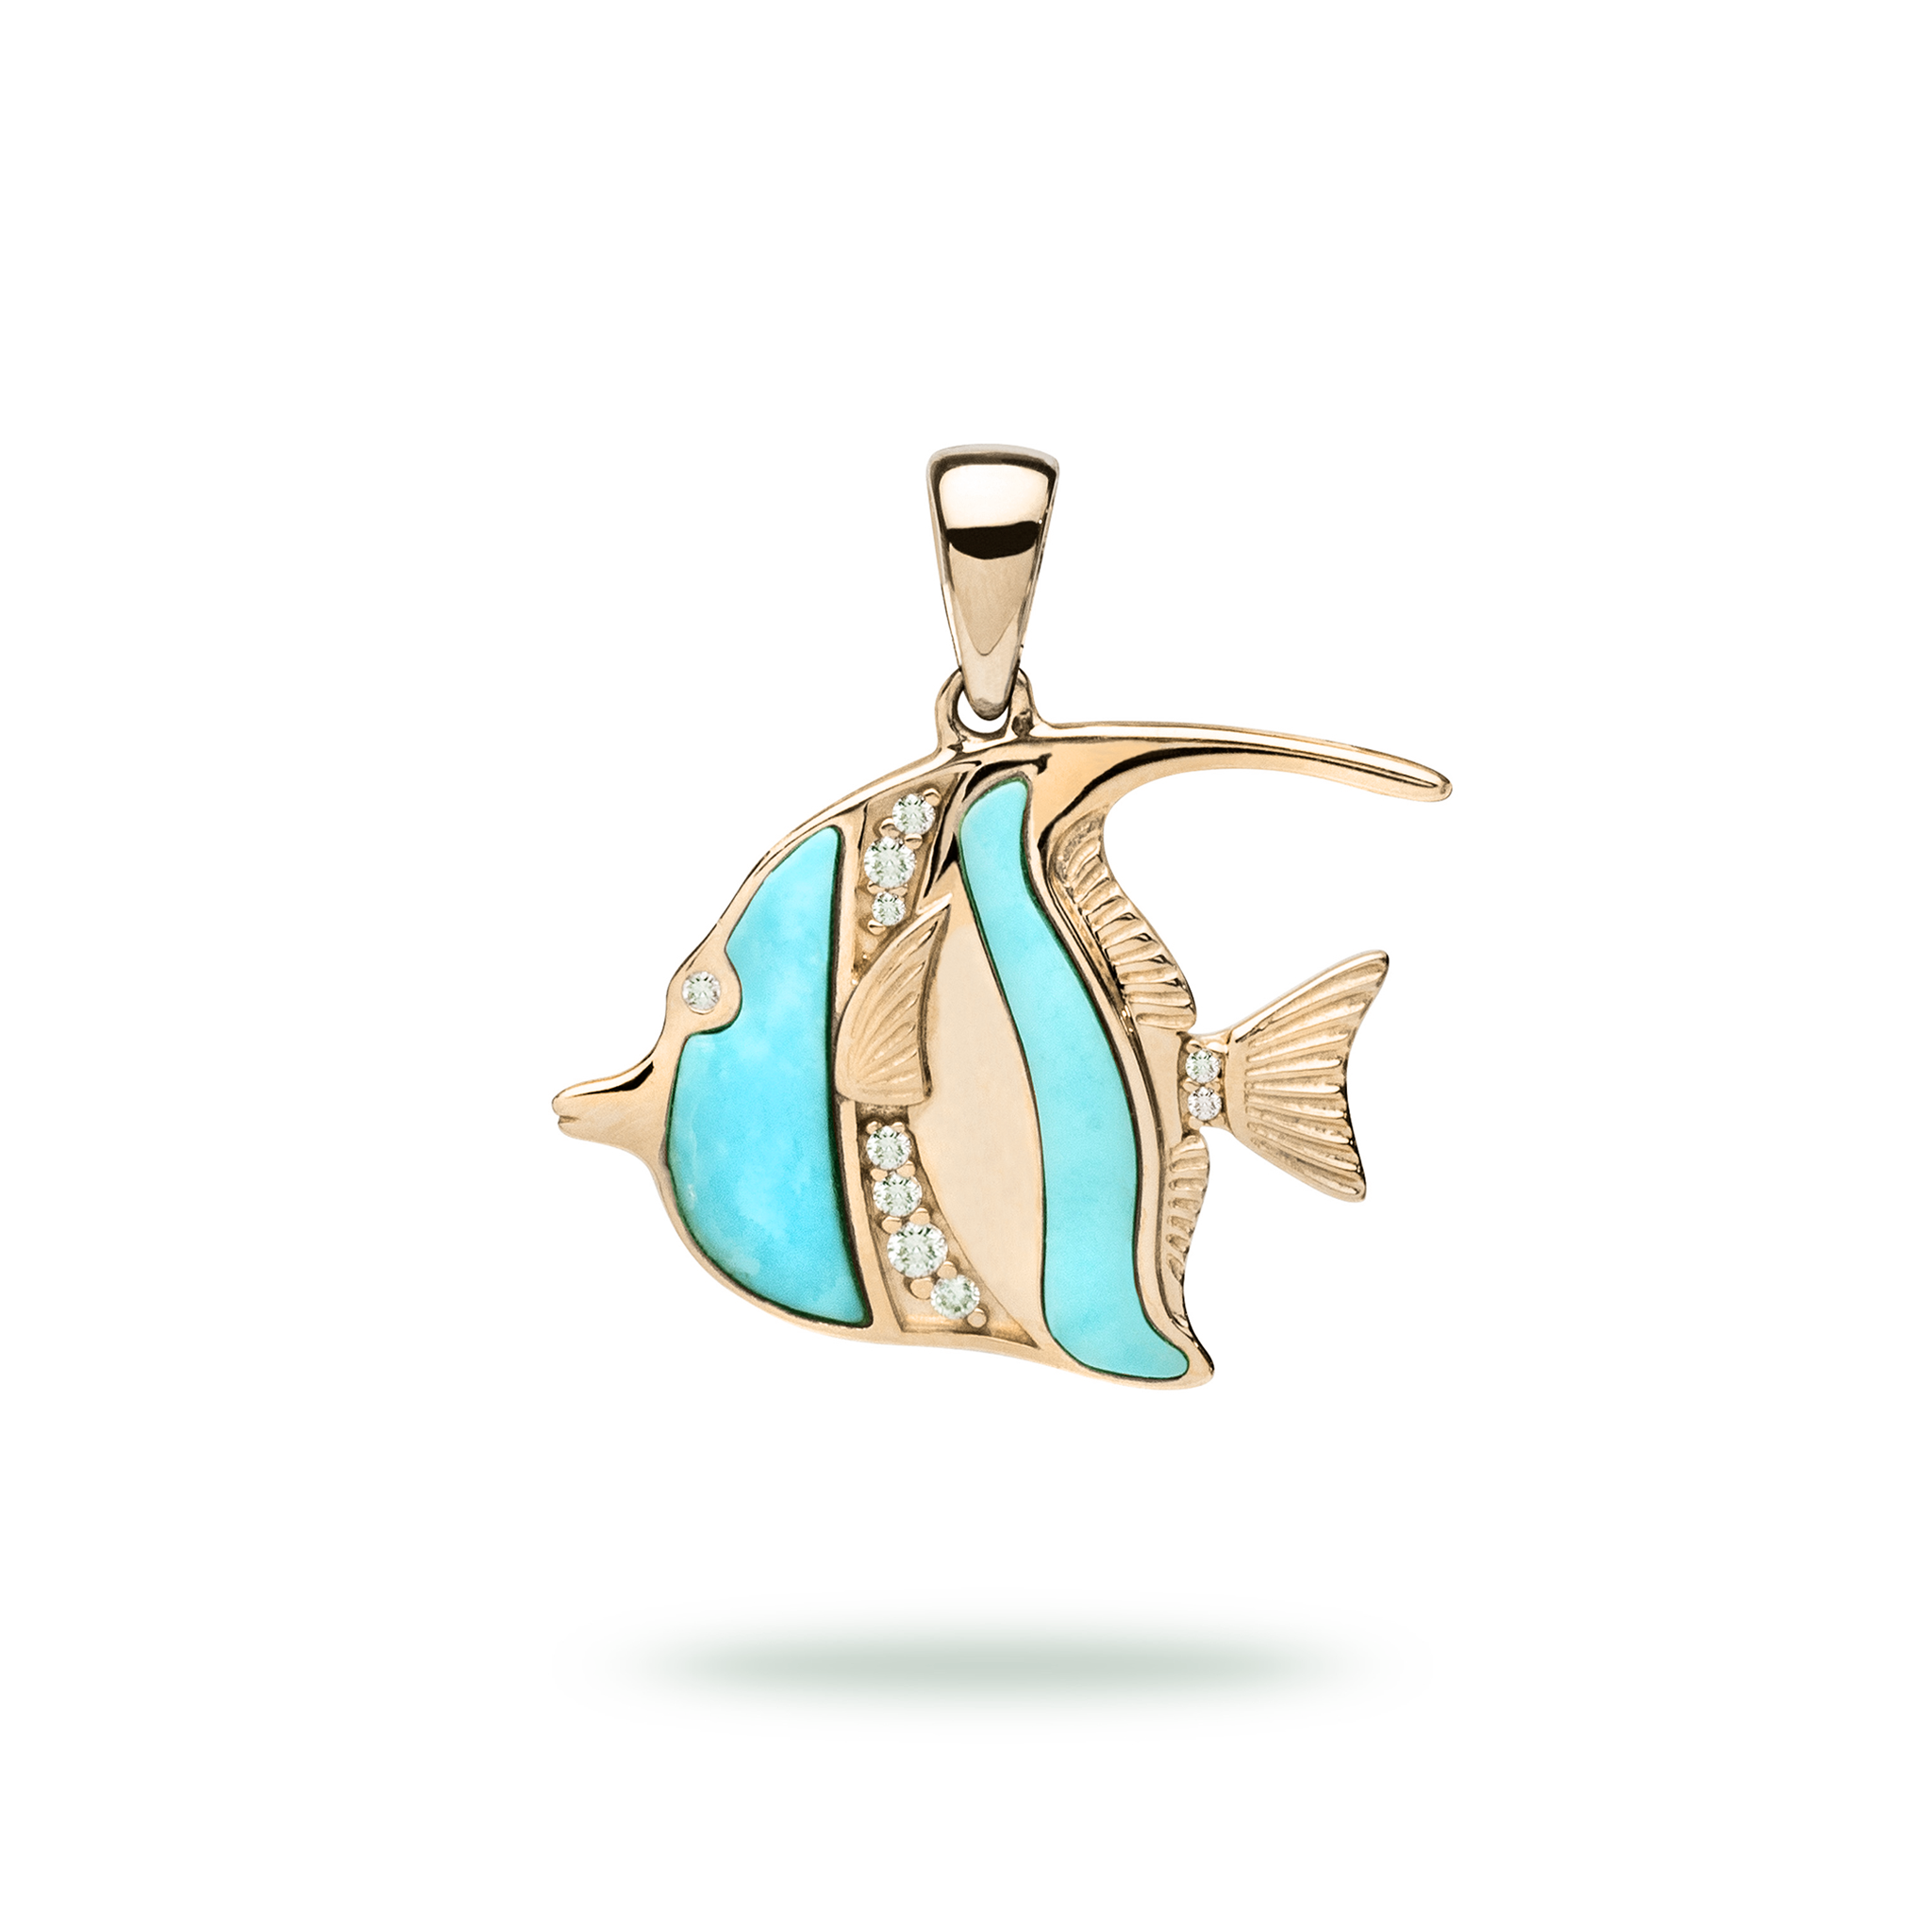 Sealife Angelfish Turquoise Pendant in Gold with Diamonds - 23mm